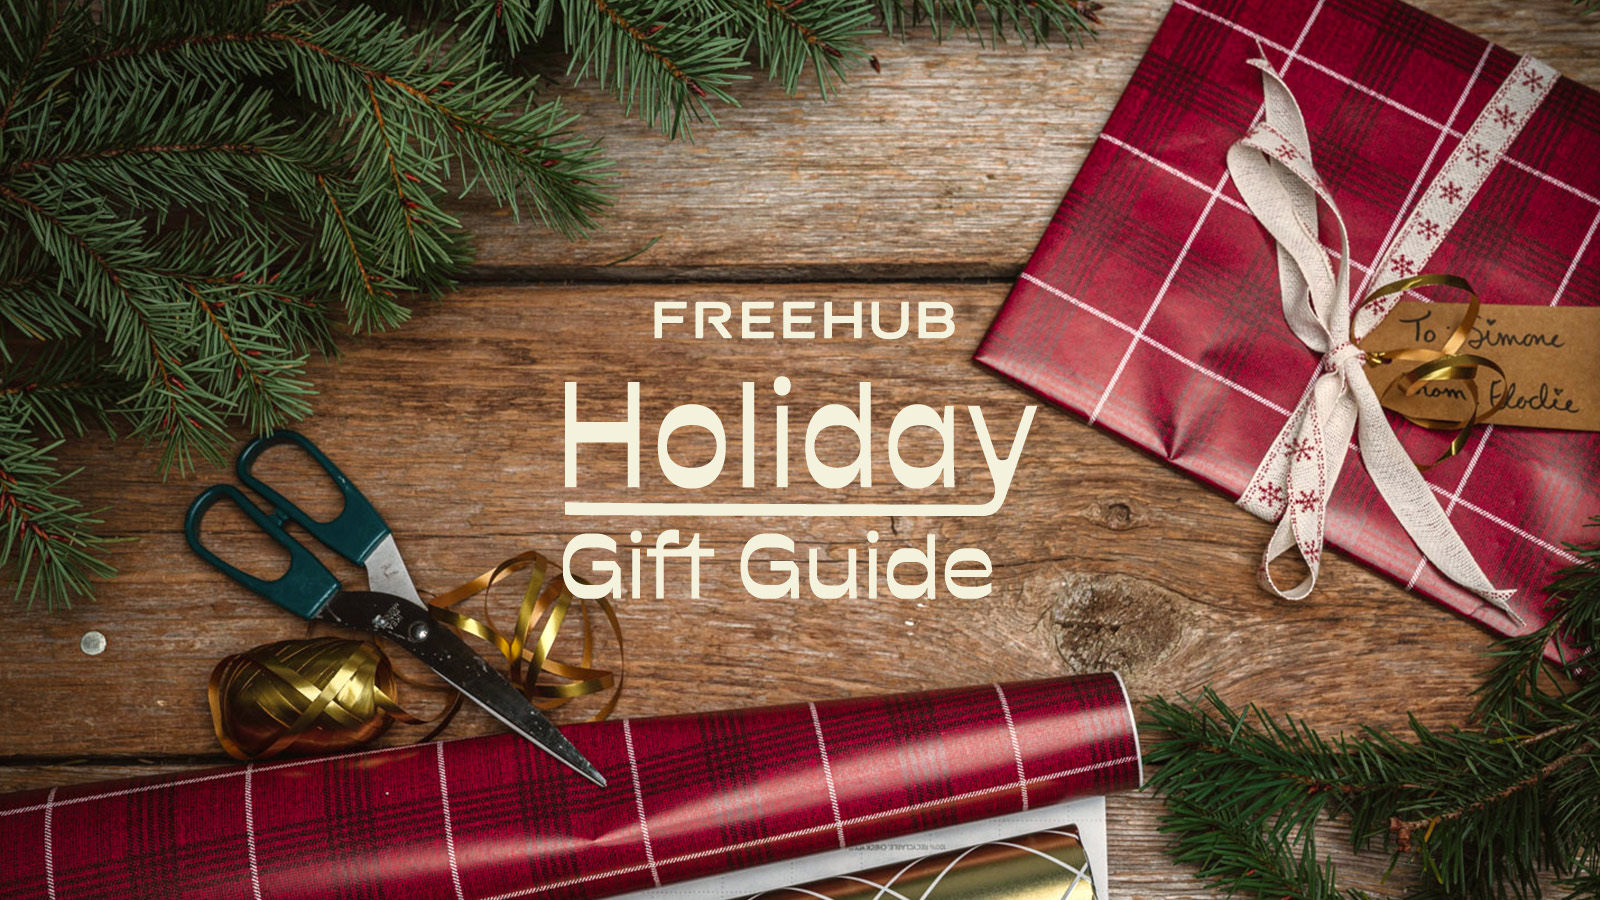 GoPro Hero 12 Holiday Shopping Guide